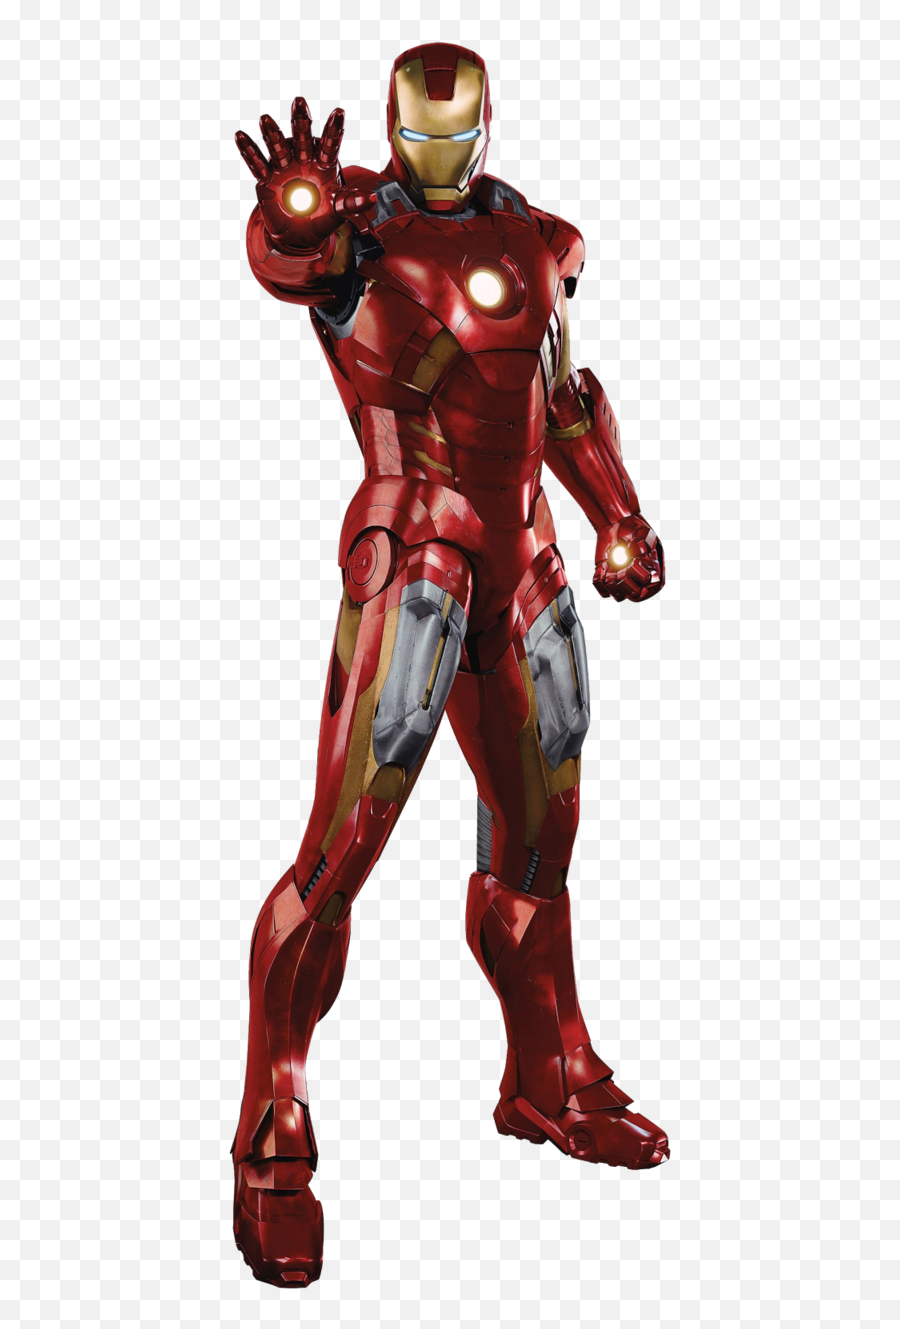 Ironman Pnhg Images Tony Stark Transparent Marvel Pngs 47 Emoji,Imagens De Emotions